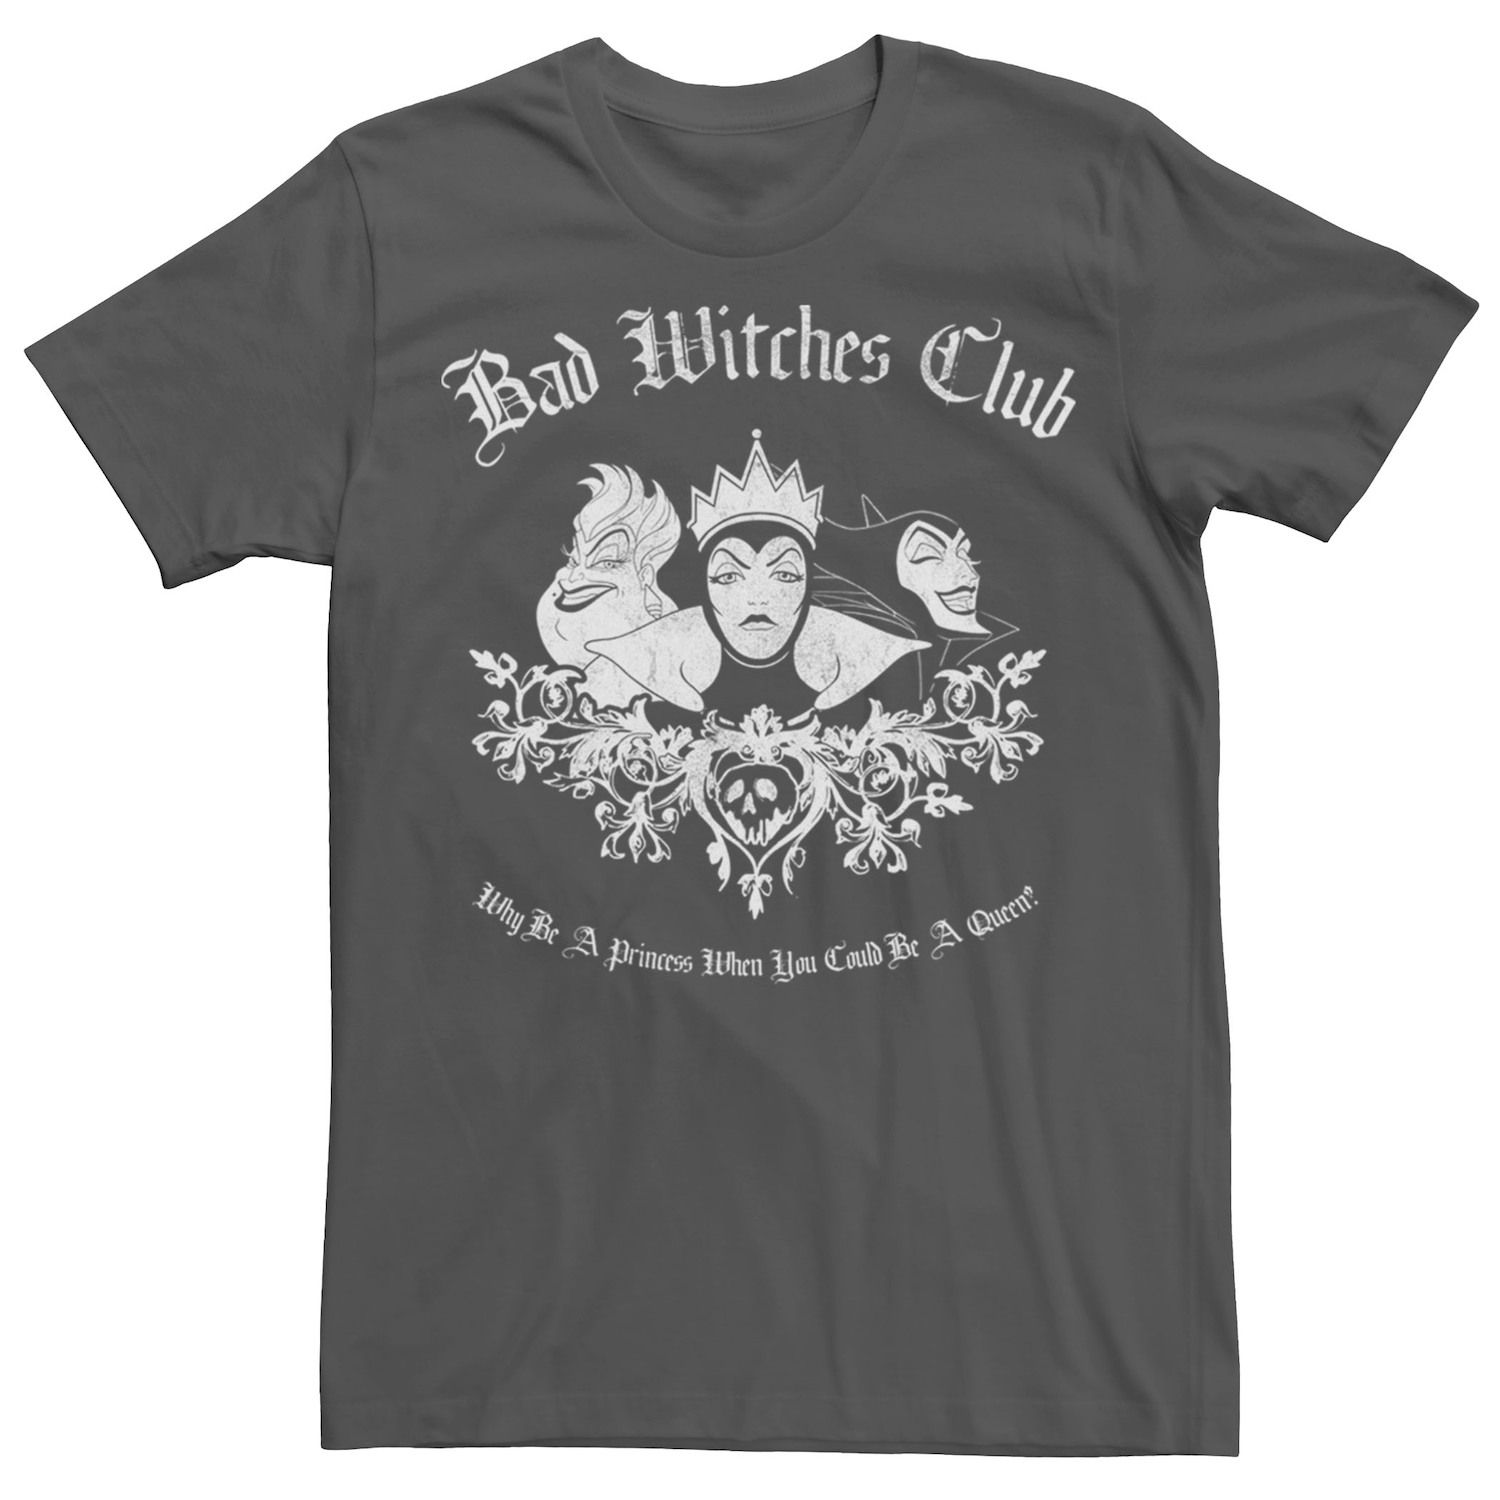 Мужская футболка Disney Villains Bad Witches Club Group Shot